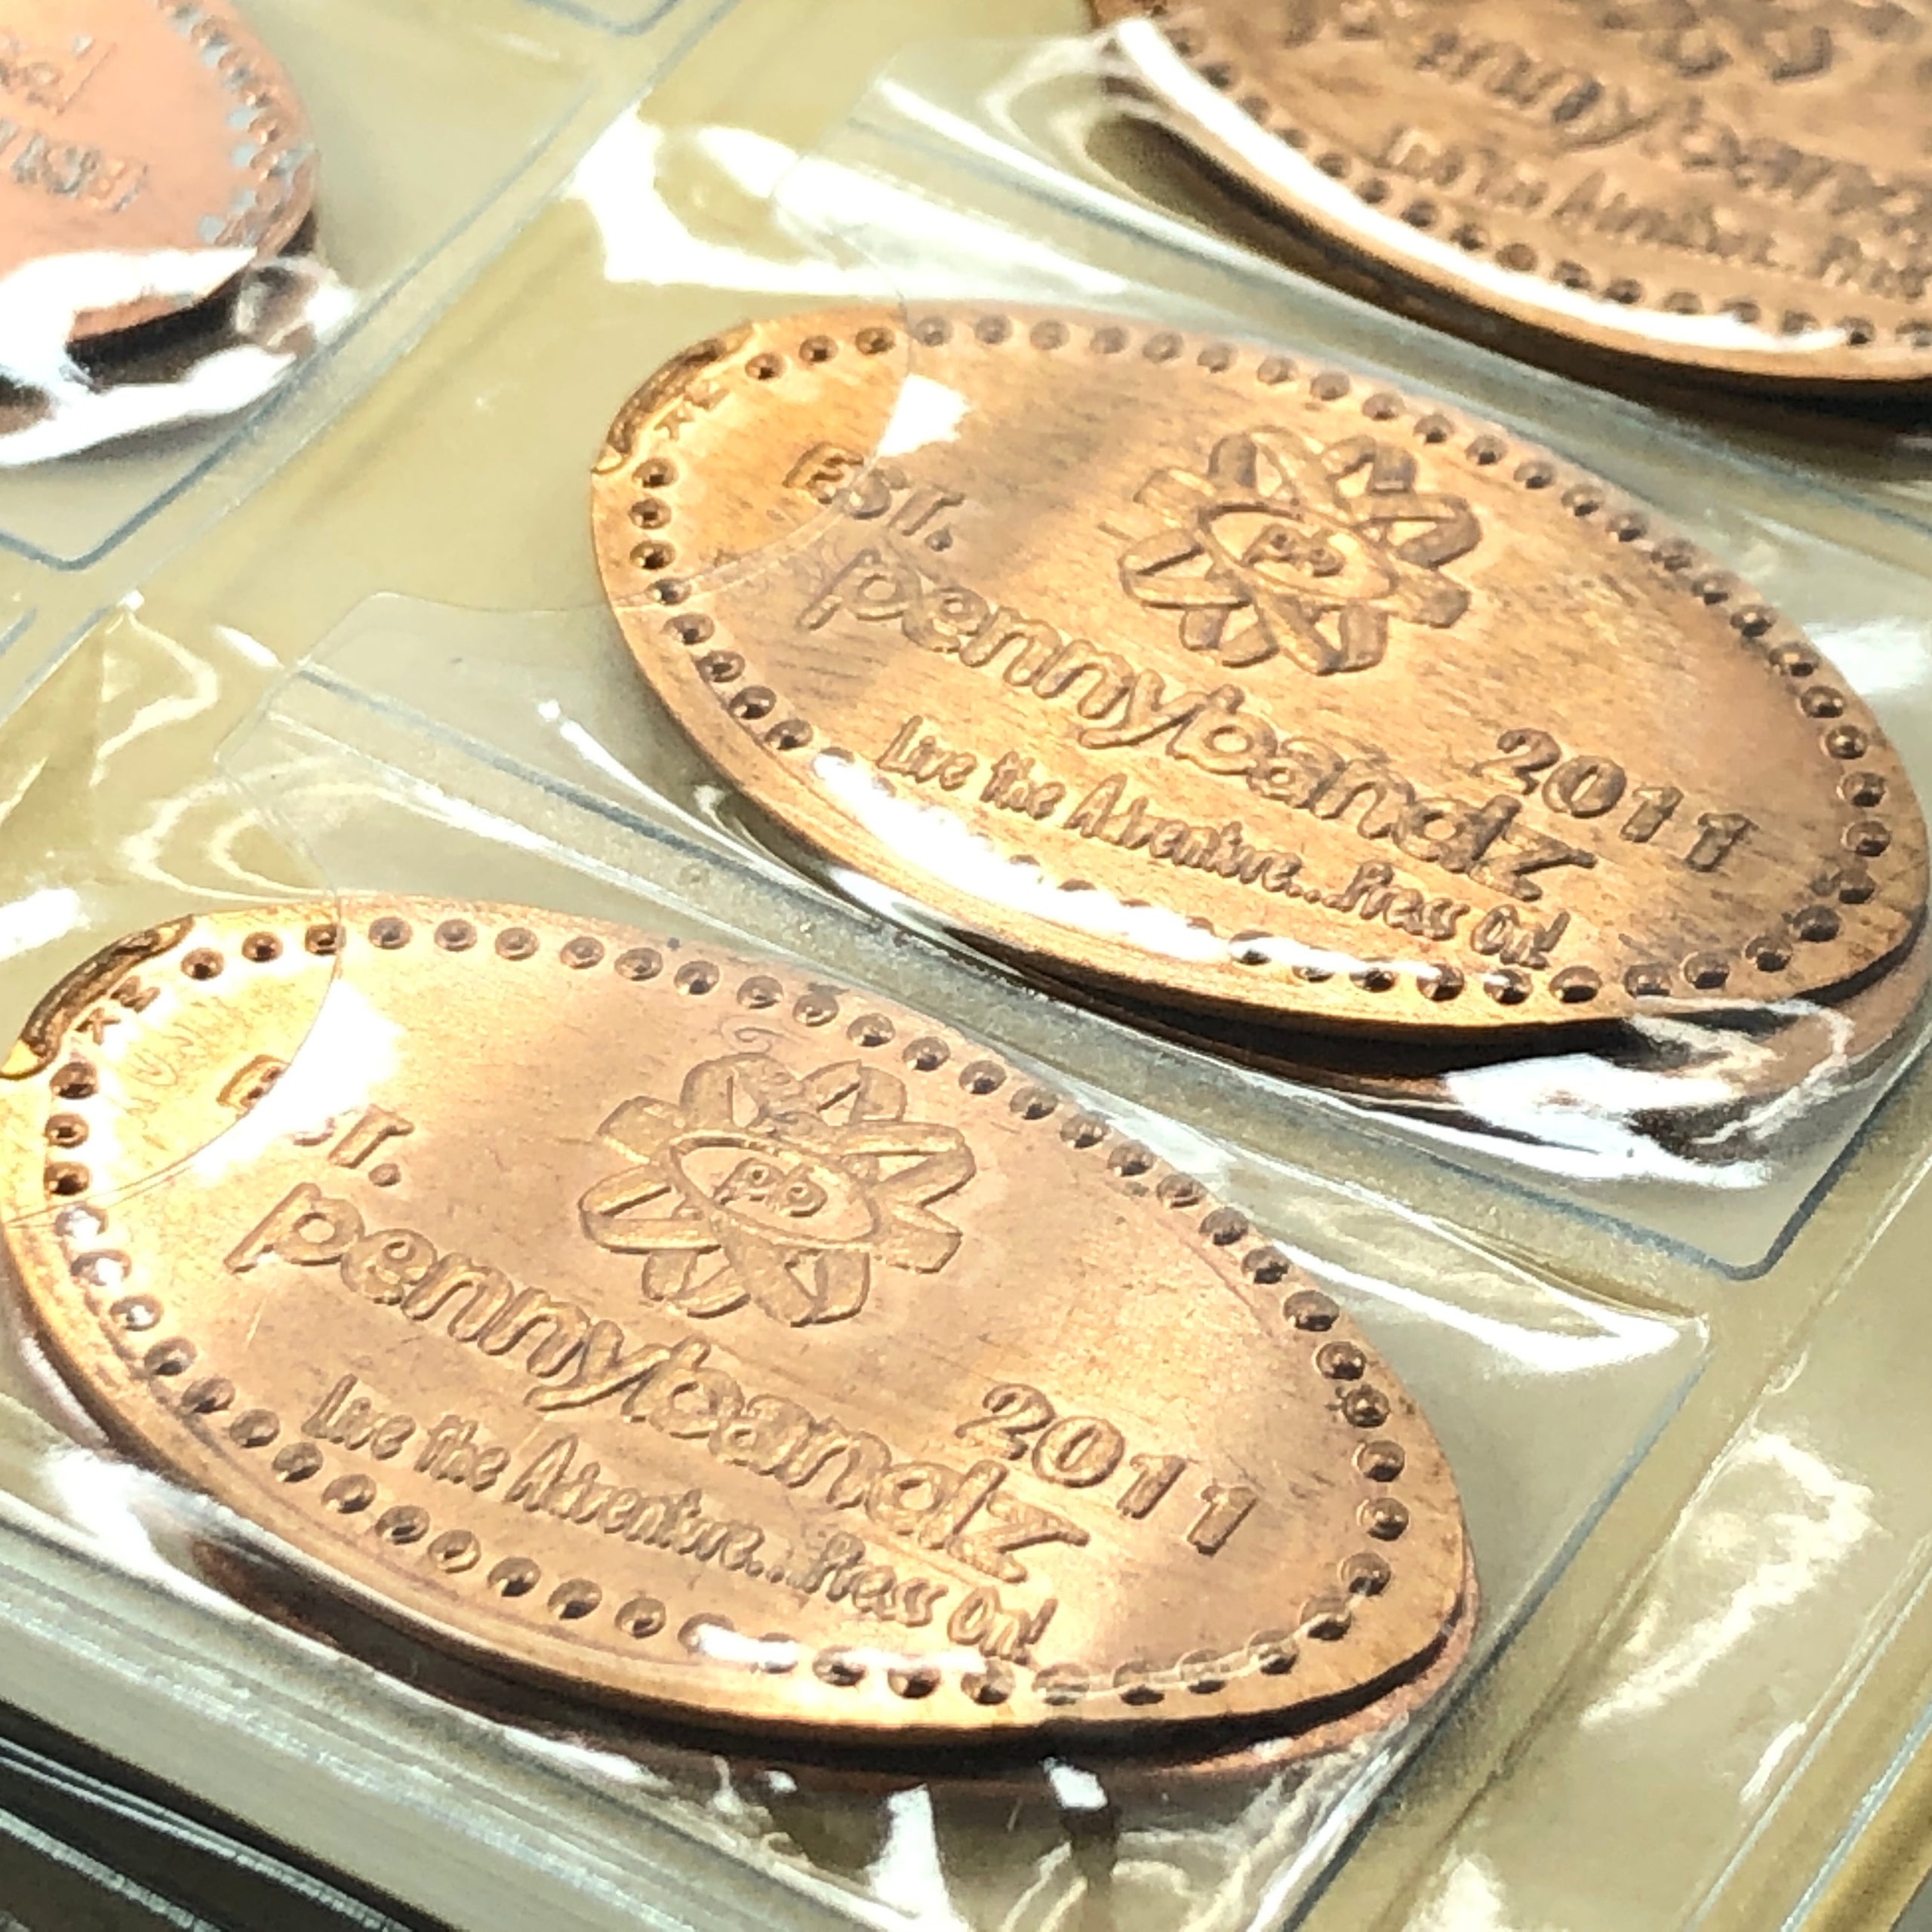 Medallion Journal™ by Pennybandz® in Rustic Brown - Holds 42 Souvenir –  Pennybandz Wholesale